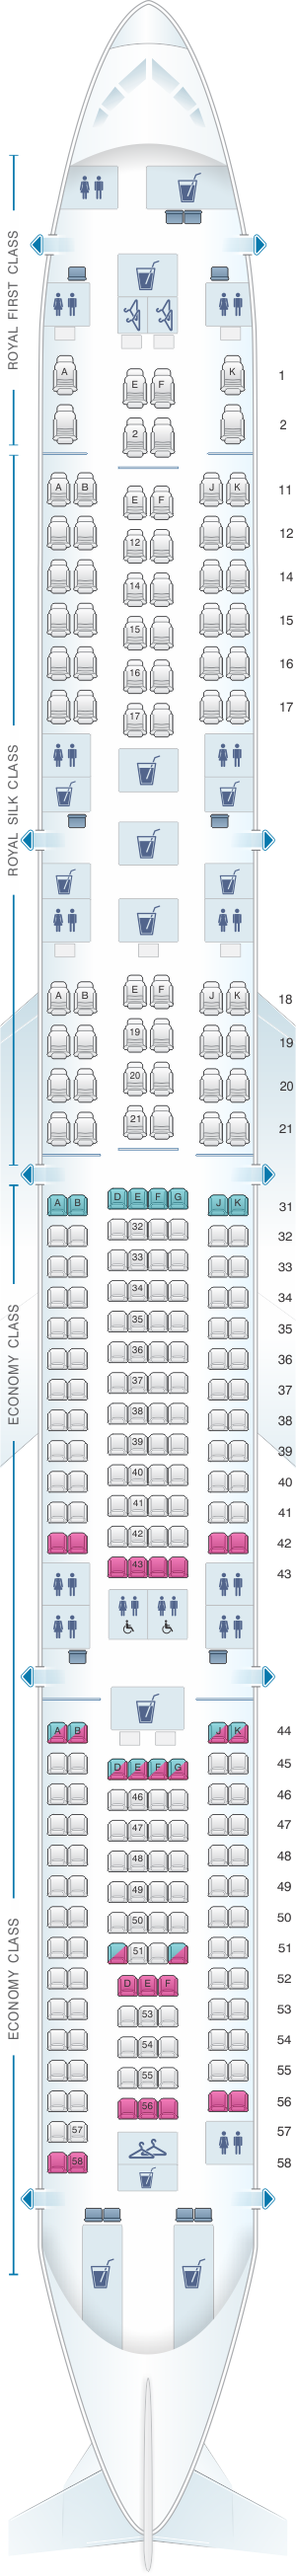 Seat map for Thai Airways International Airbus A340 600